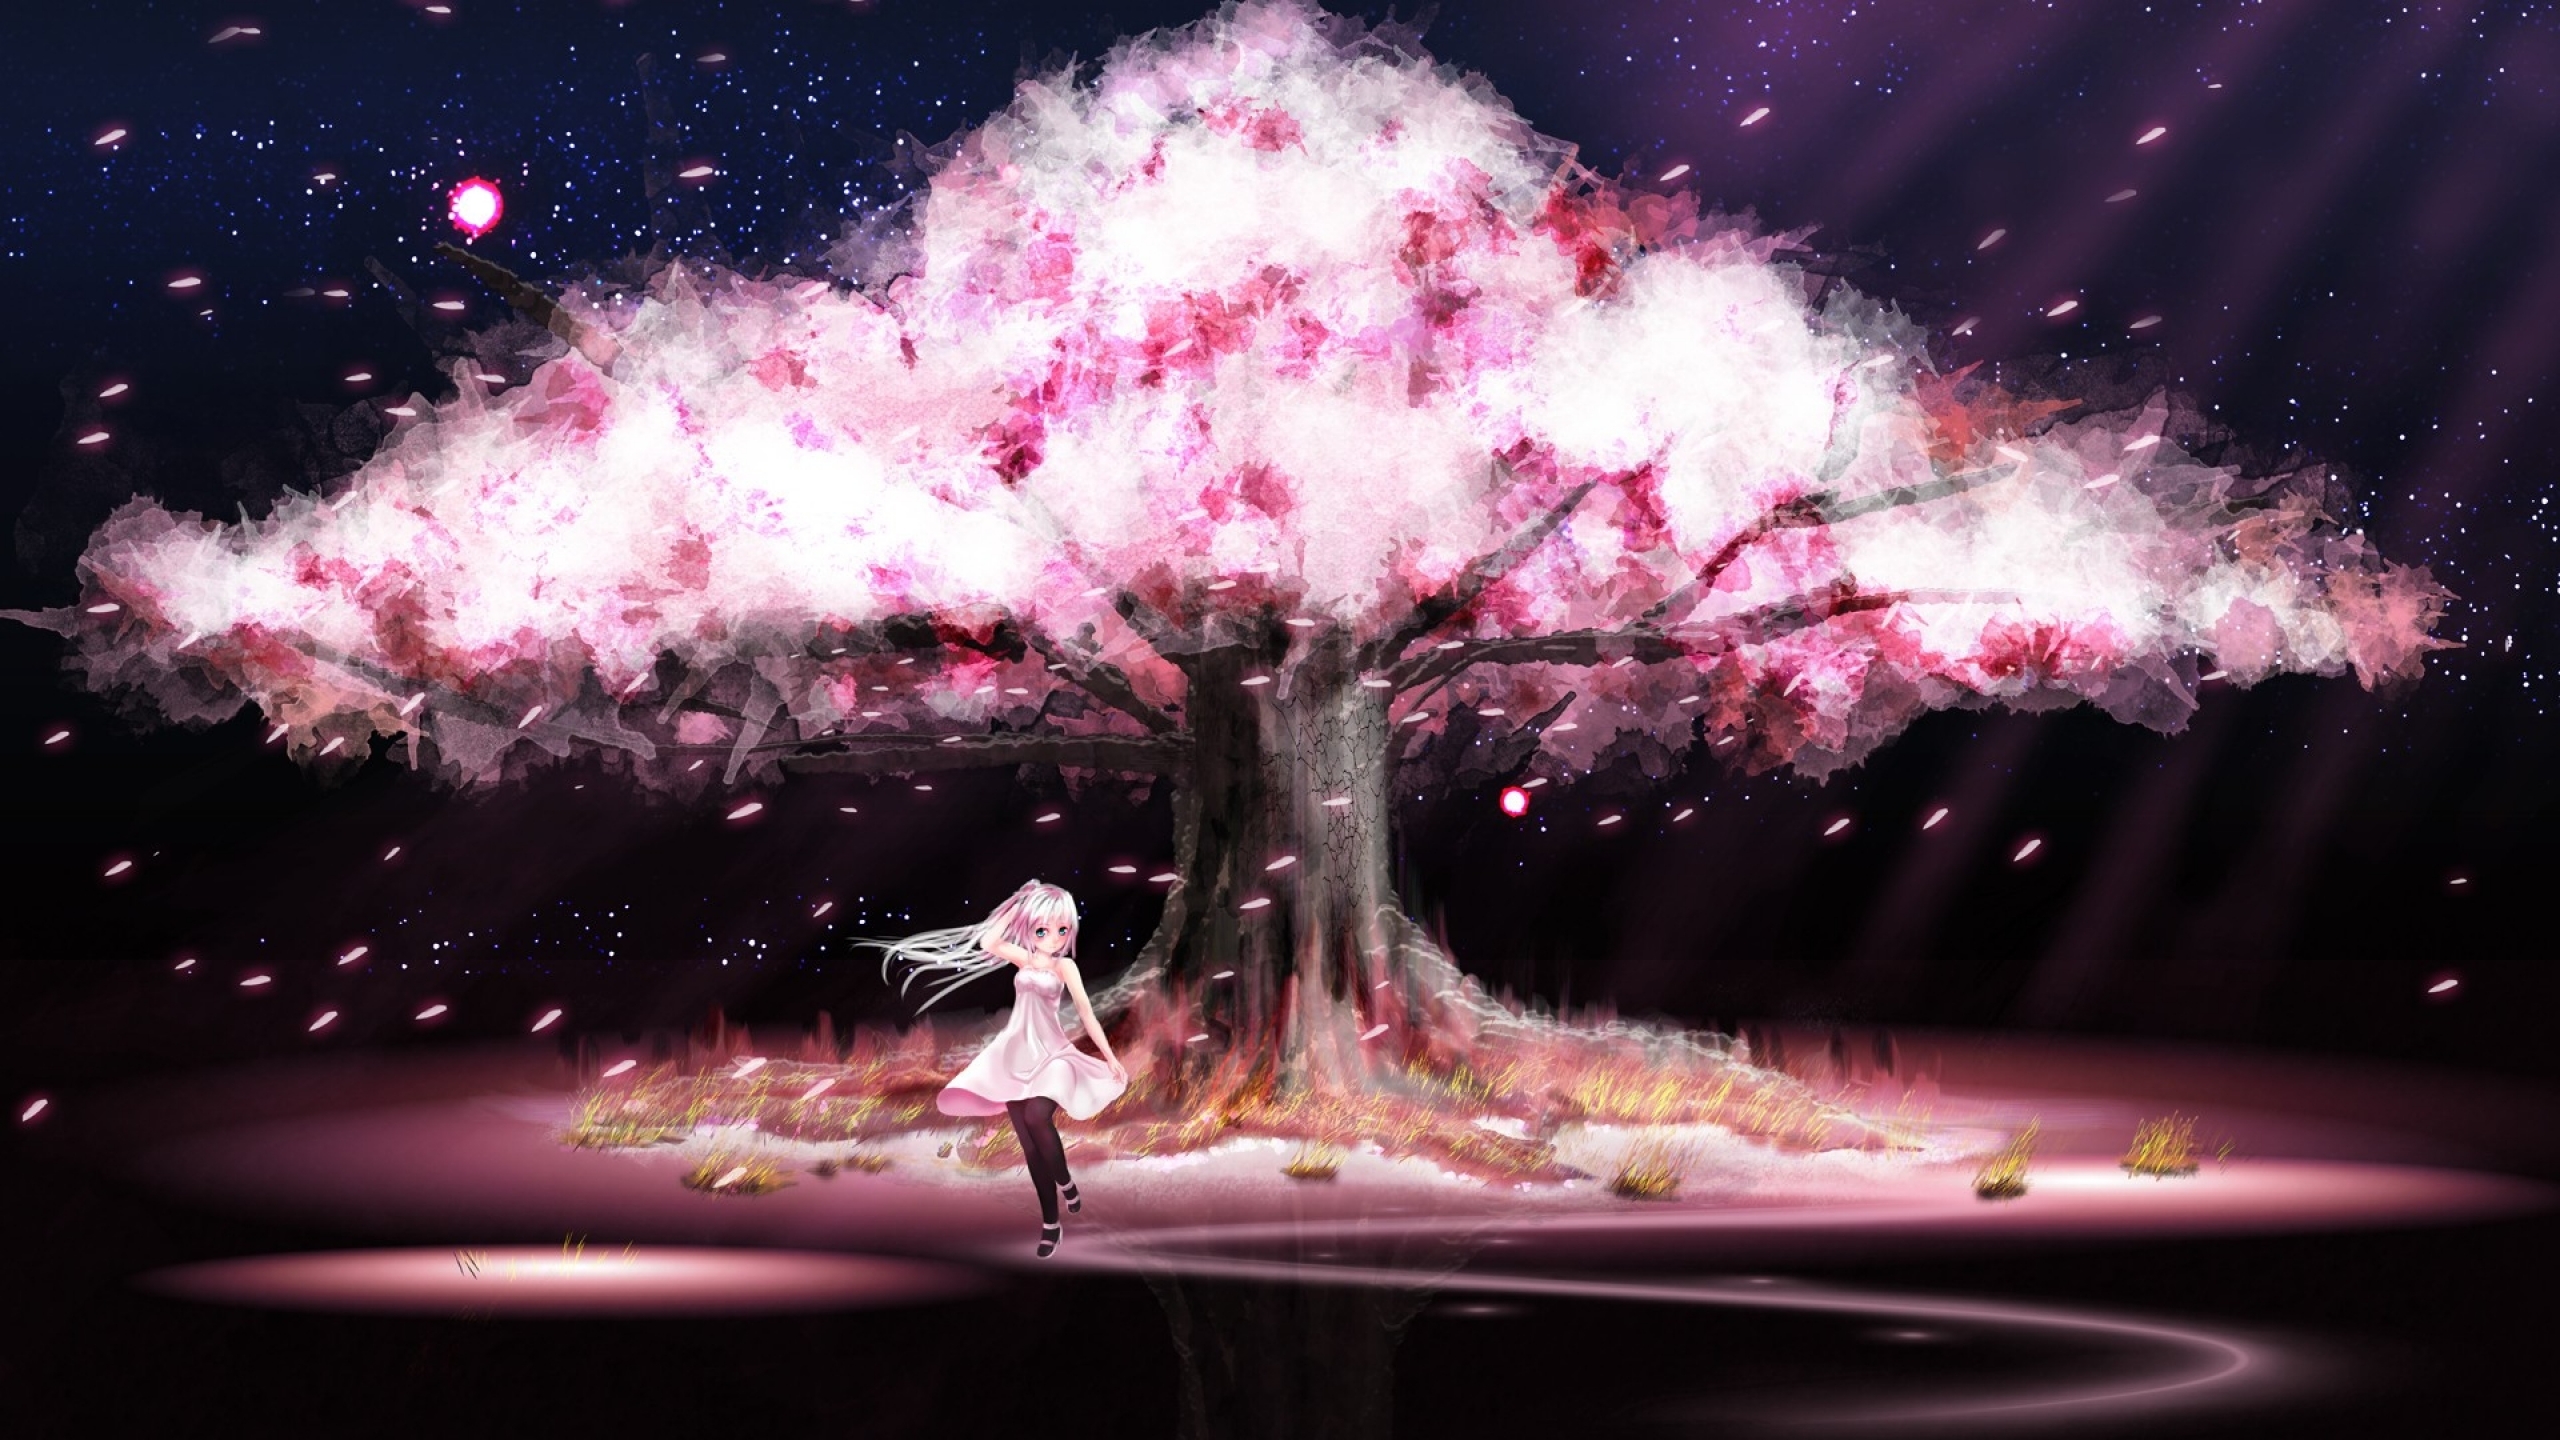 Anime Cherry Blossom Wallpaper